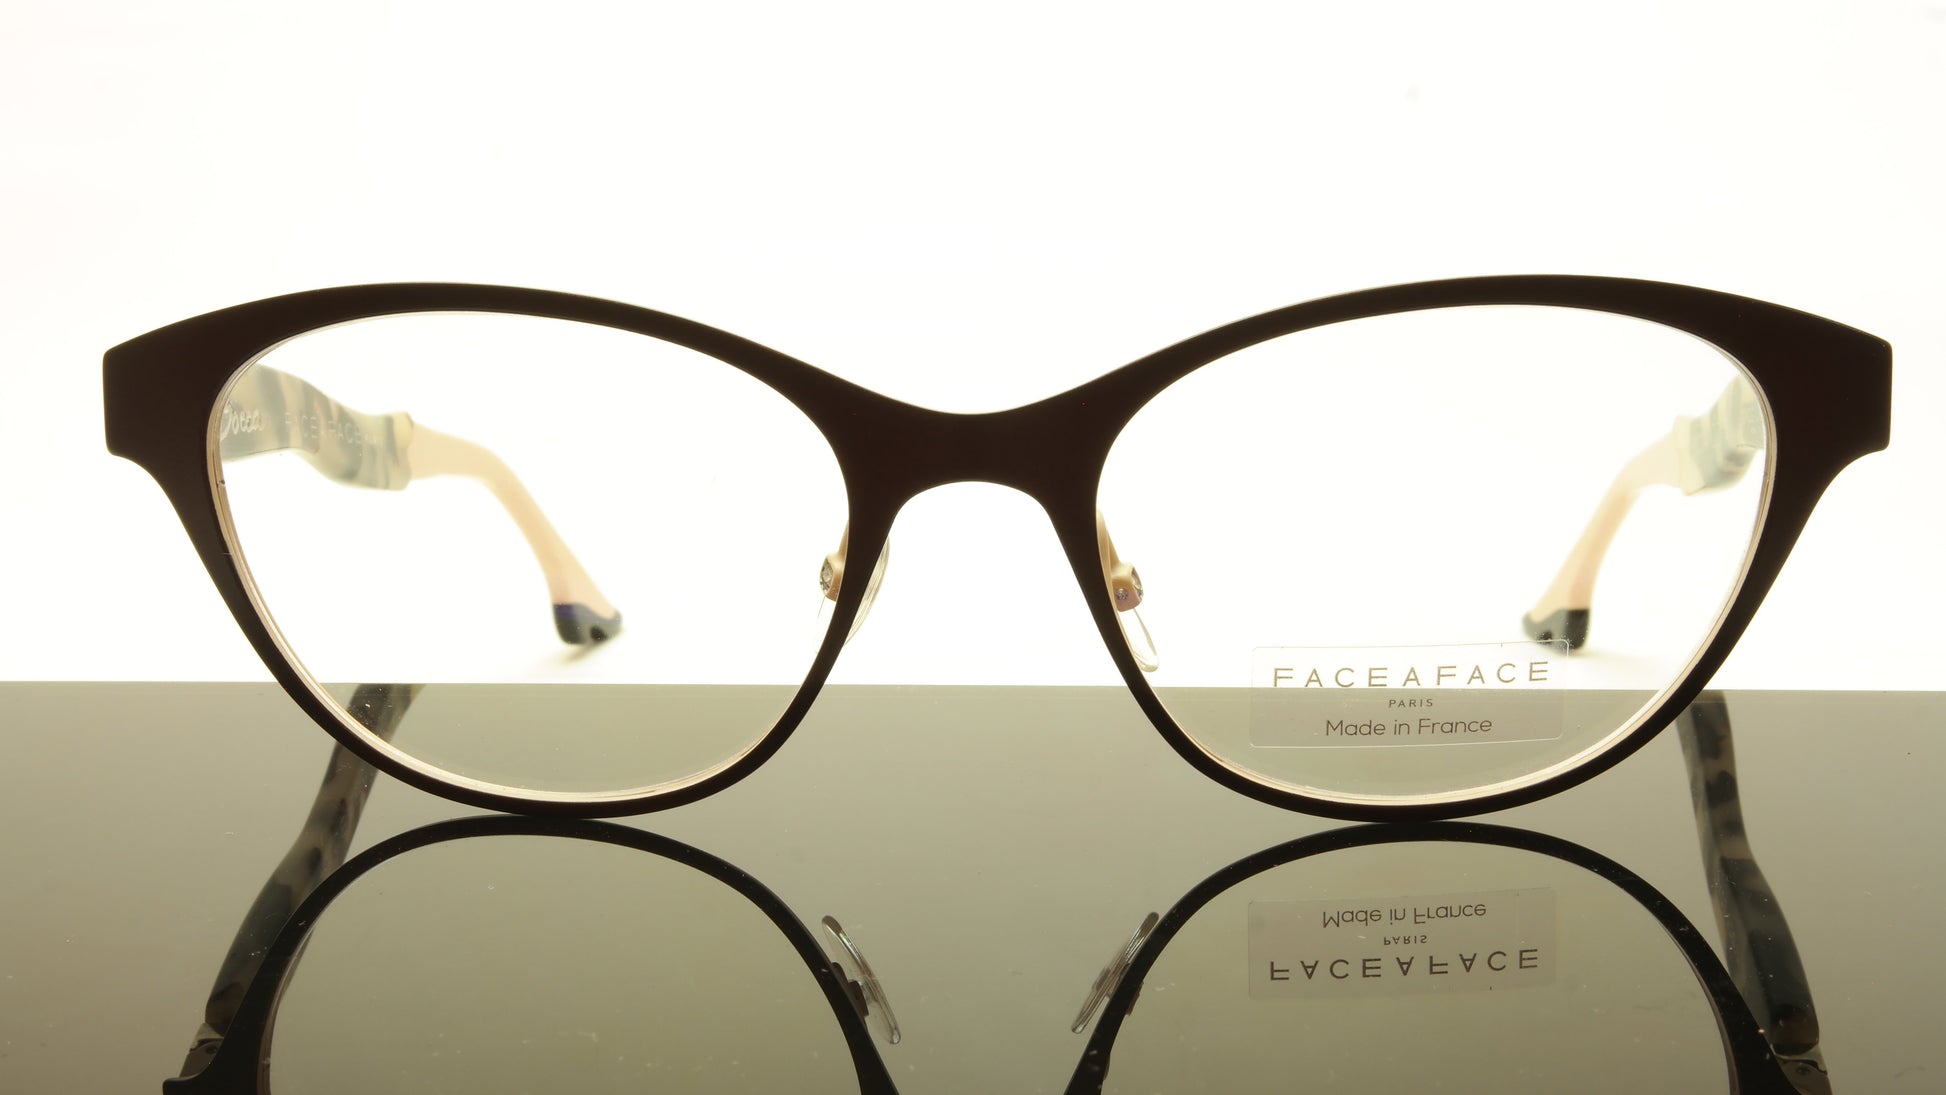 Face A Face Bocca City 3 Col. 9409 Eyeglasses France Made 52-17-142 Glasses - Frame Bay